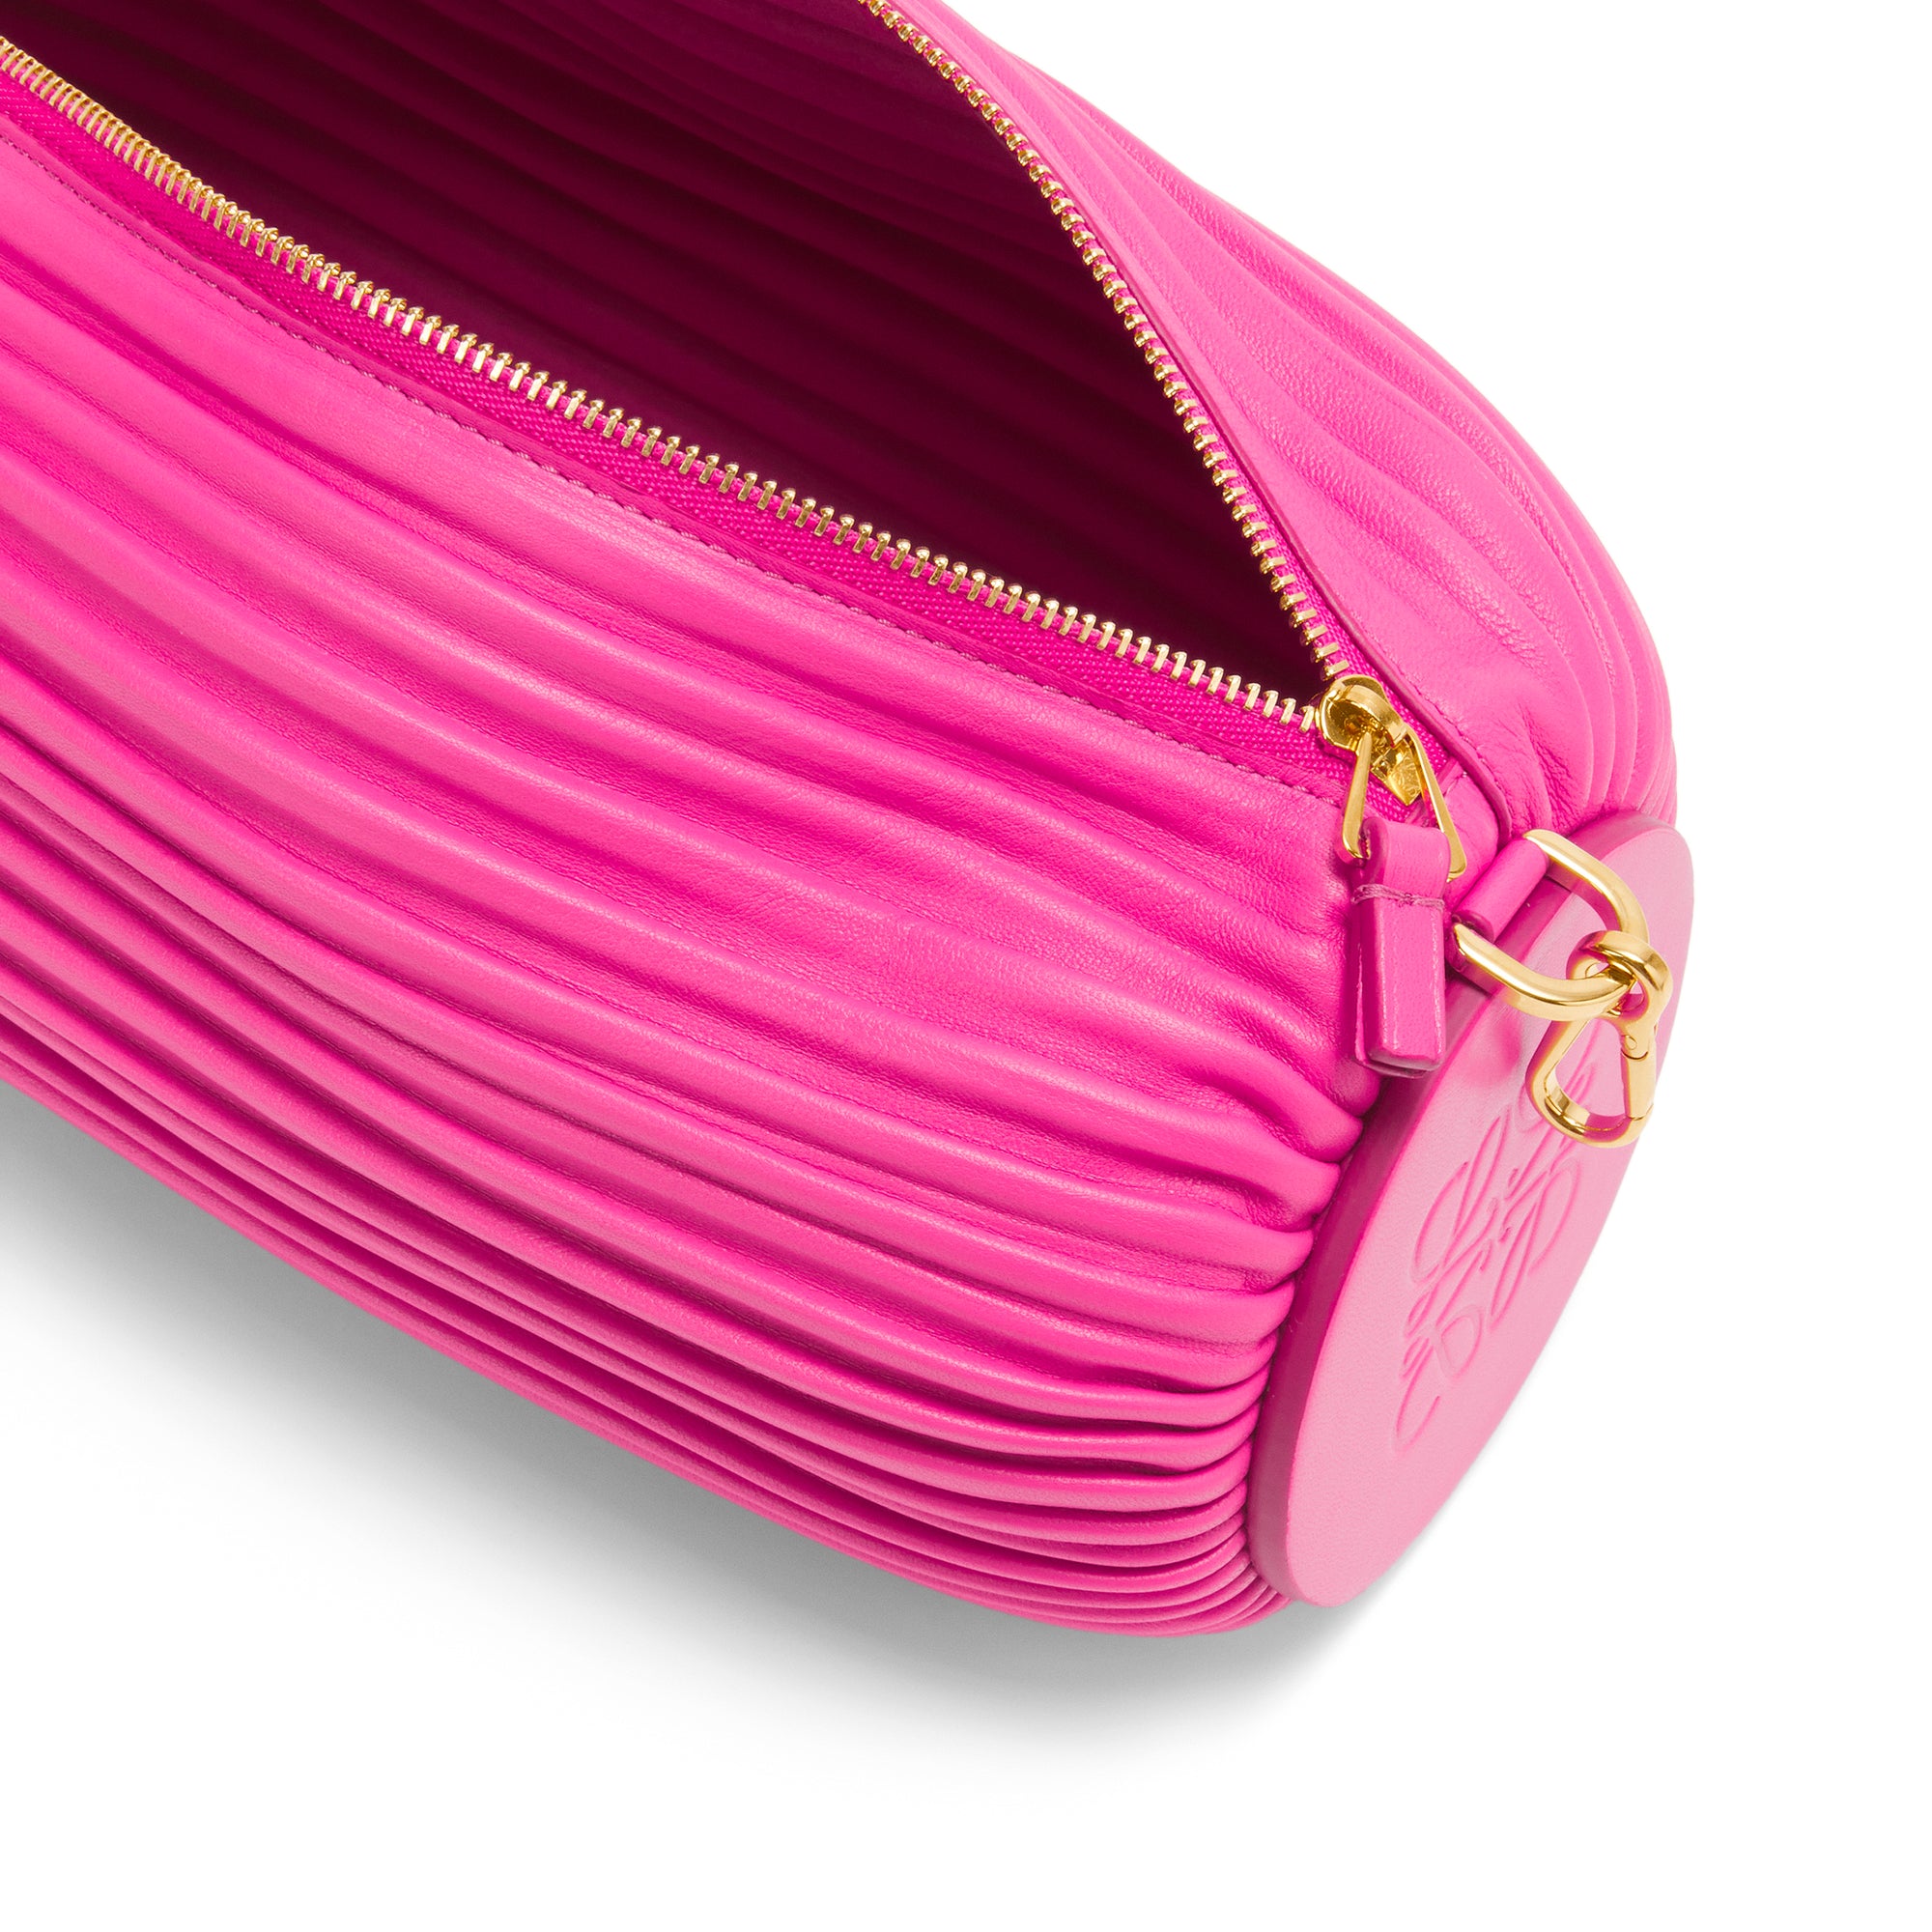 Loewe - Women’s Bracelet Pouch Bag - (Fuchsia) view 4